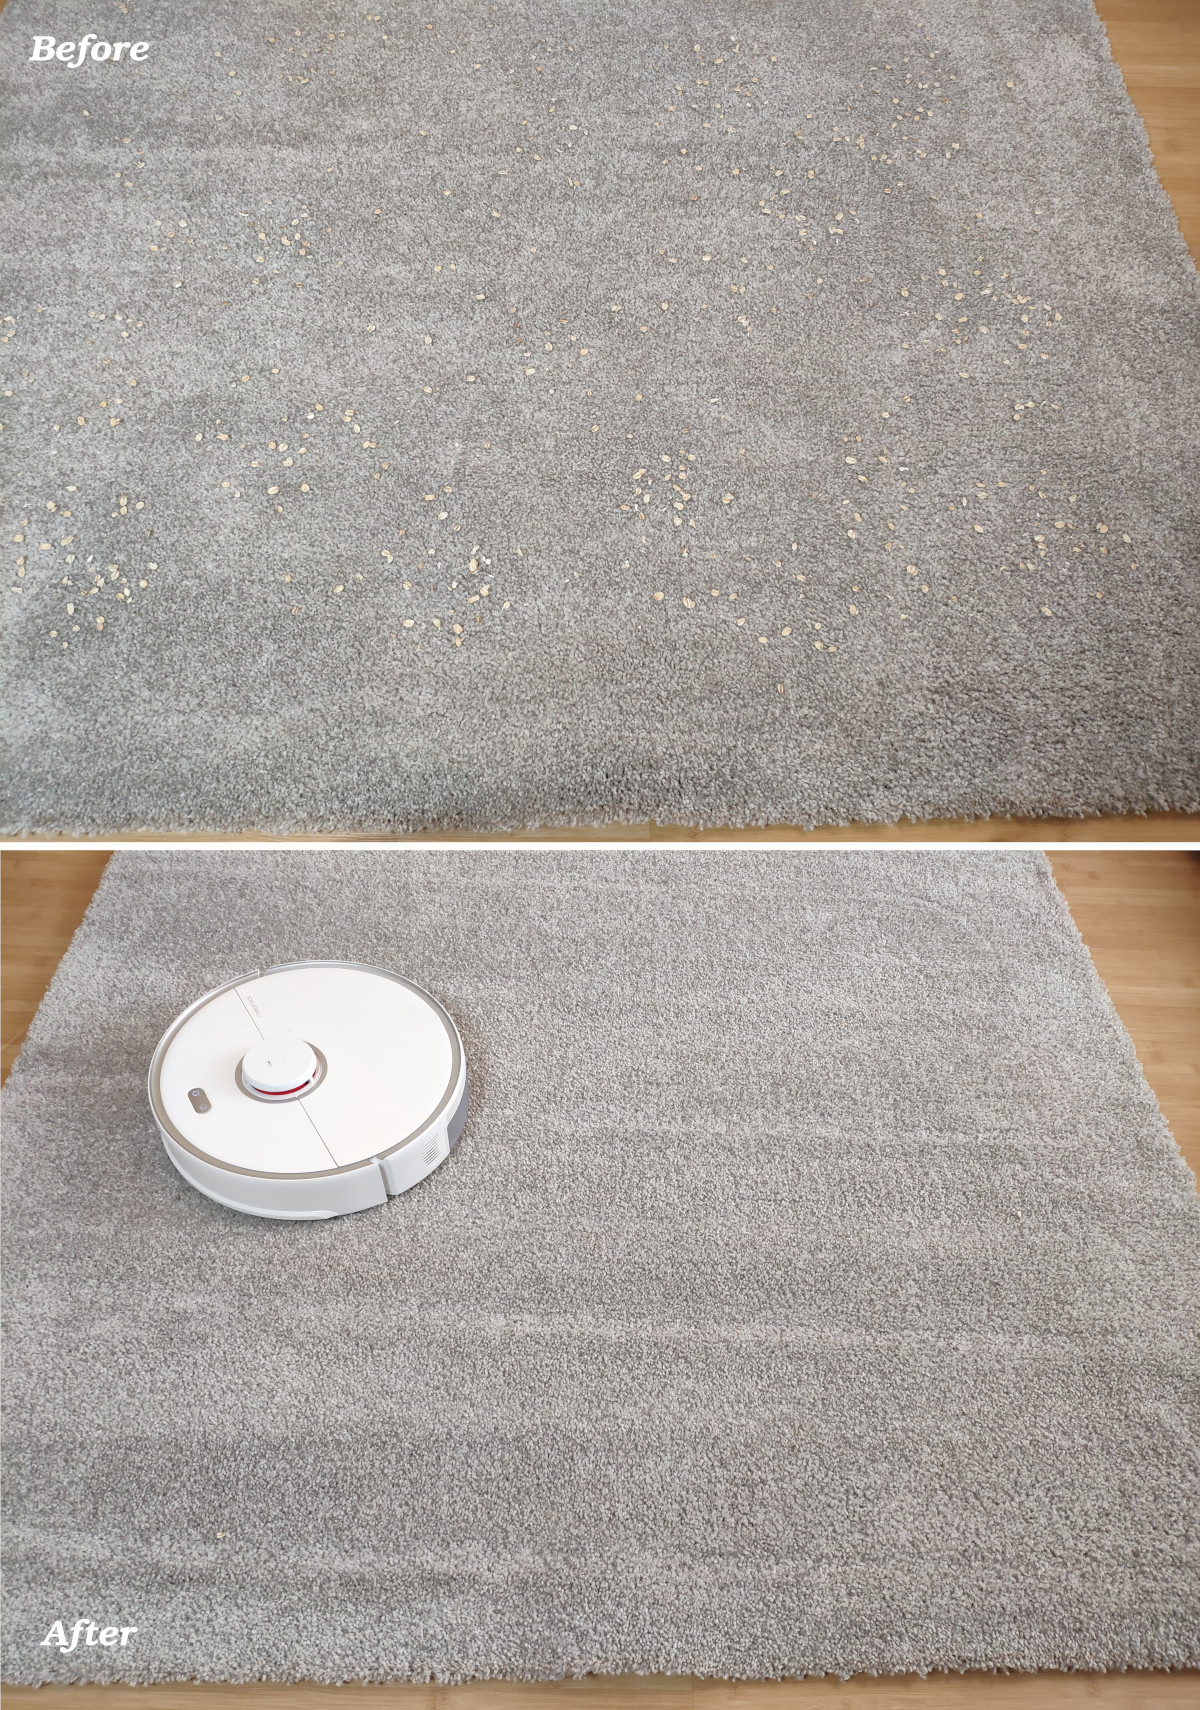 Roborock S5 Max cleaning test on a medium-pile carpet